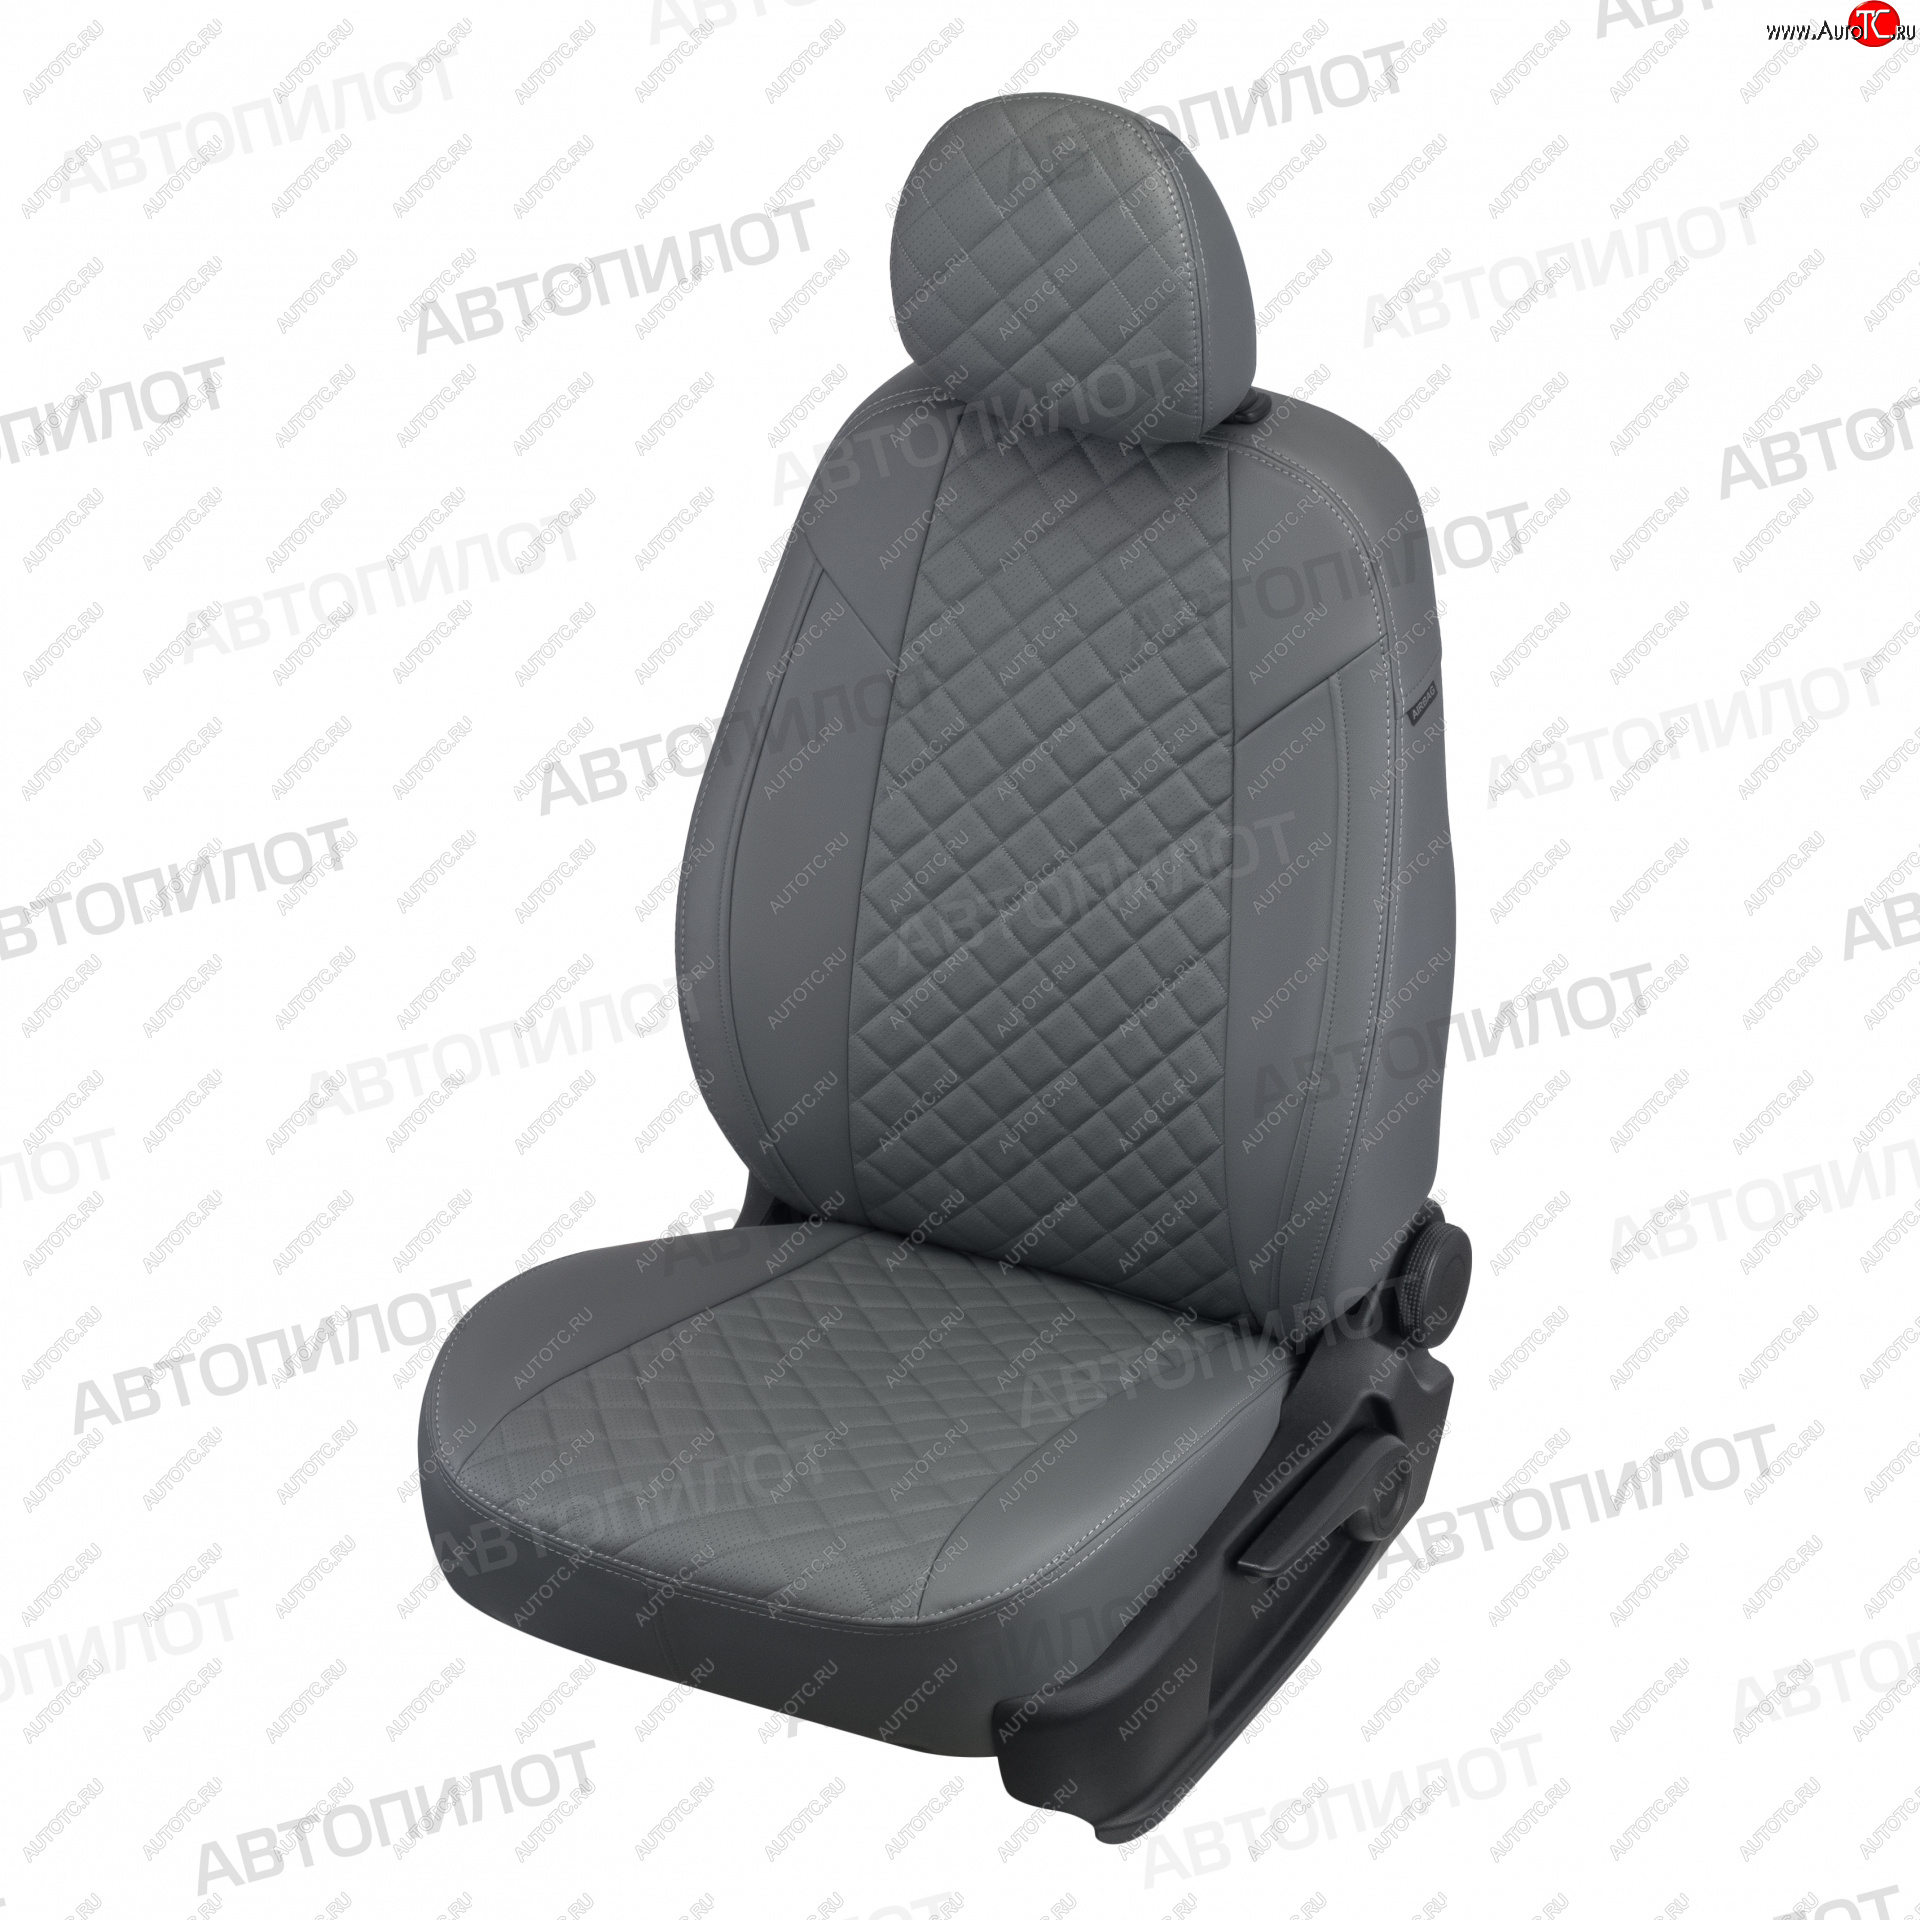 13 999 р. Чехлы сидений (экокожа) Автопилот Ромб  Hyundai Sonata  NF (2004-2010) (серый)